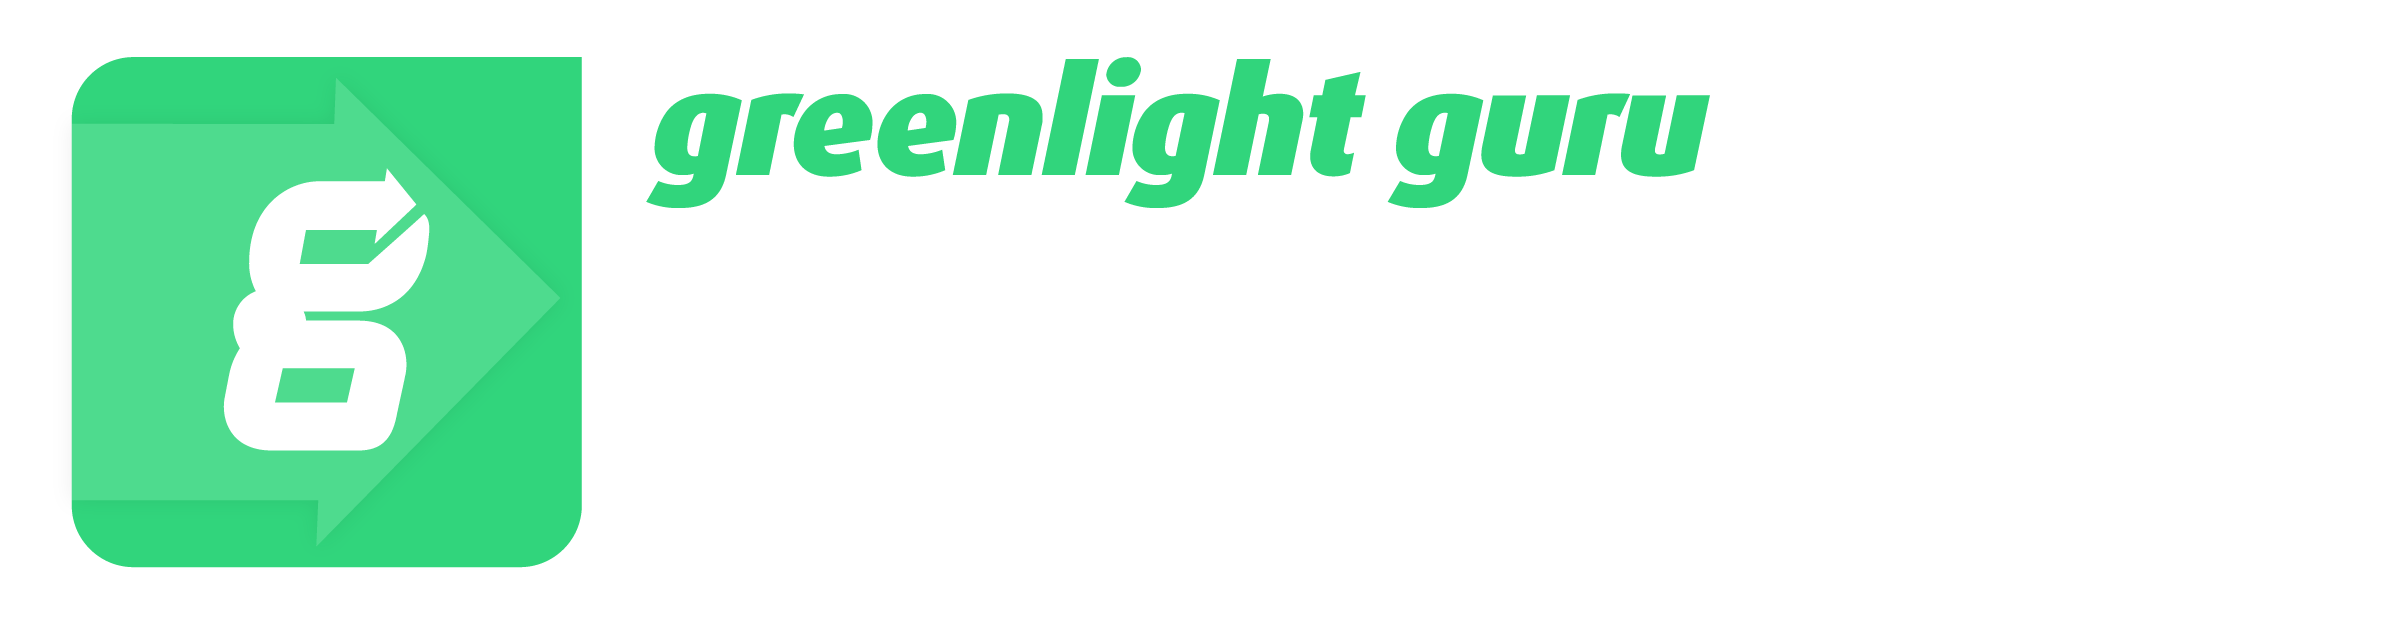 homepage greenlight guru academy logo